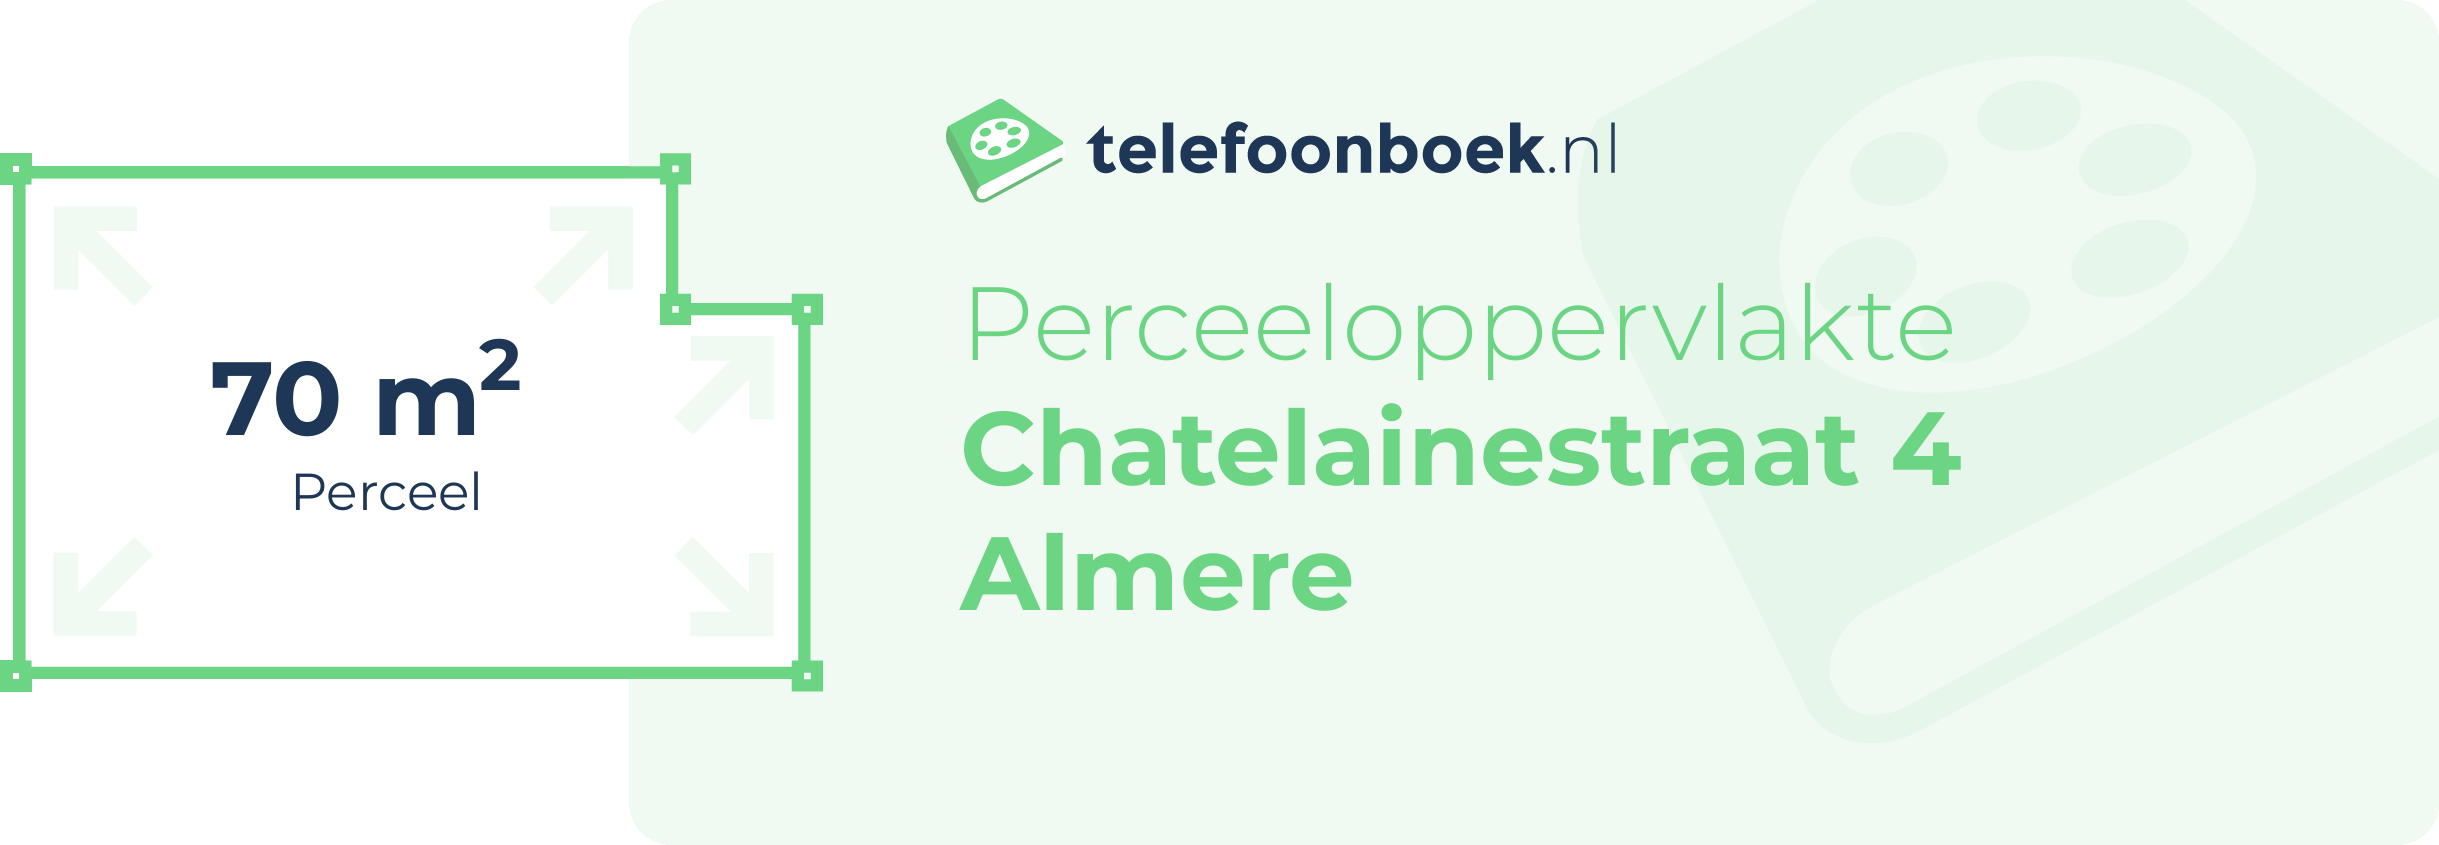 Perceeloppervlakte Chatelainestraat 4 Almere